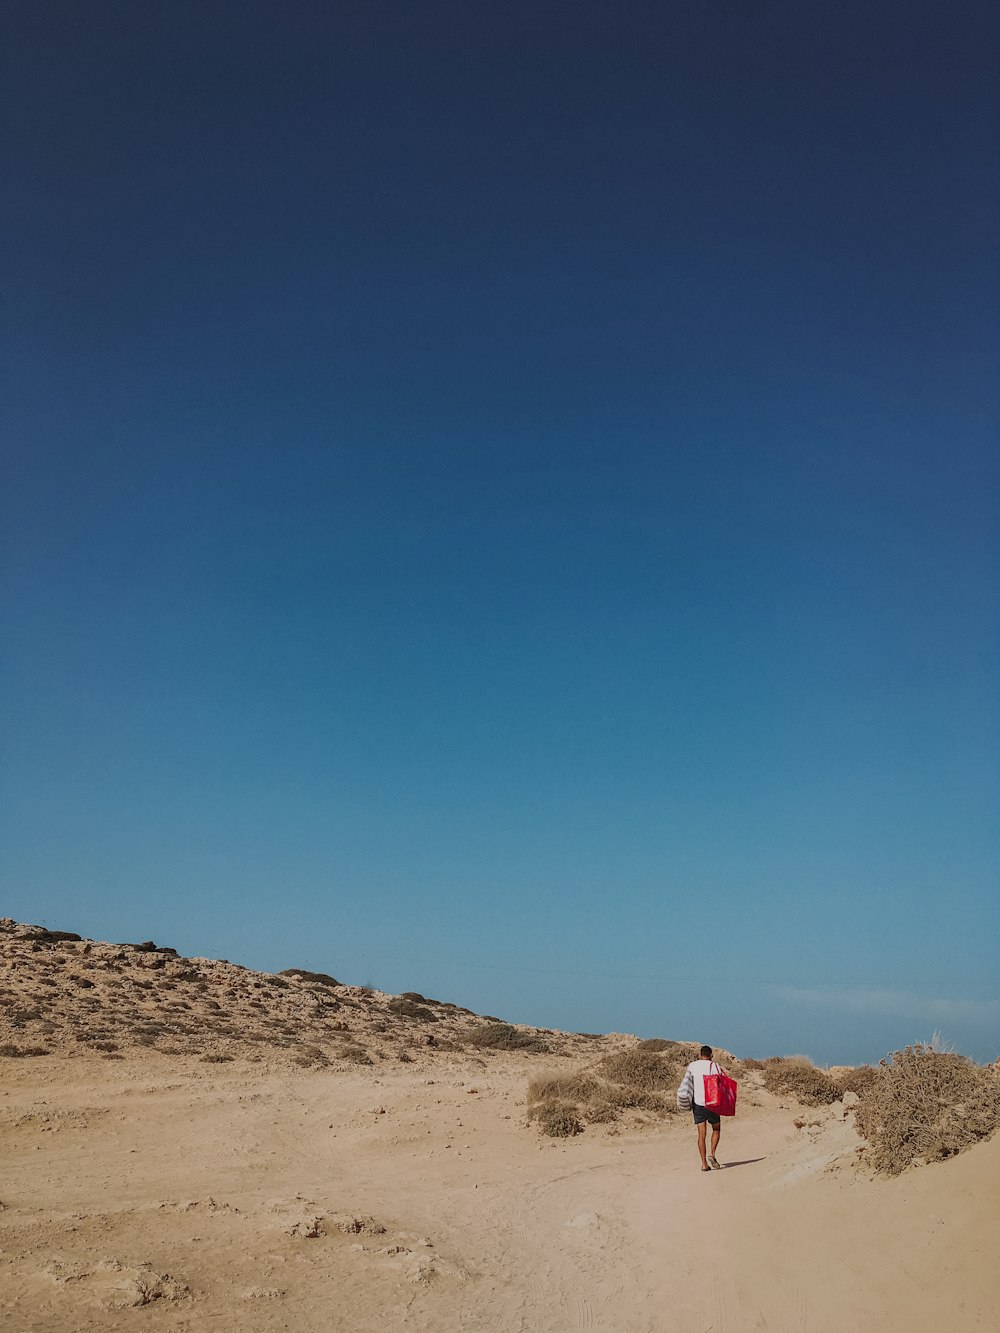 a person walking on a sandy beach under a blue sky